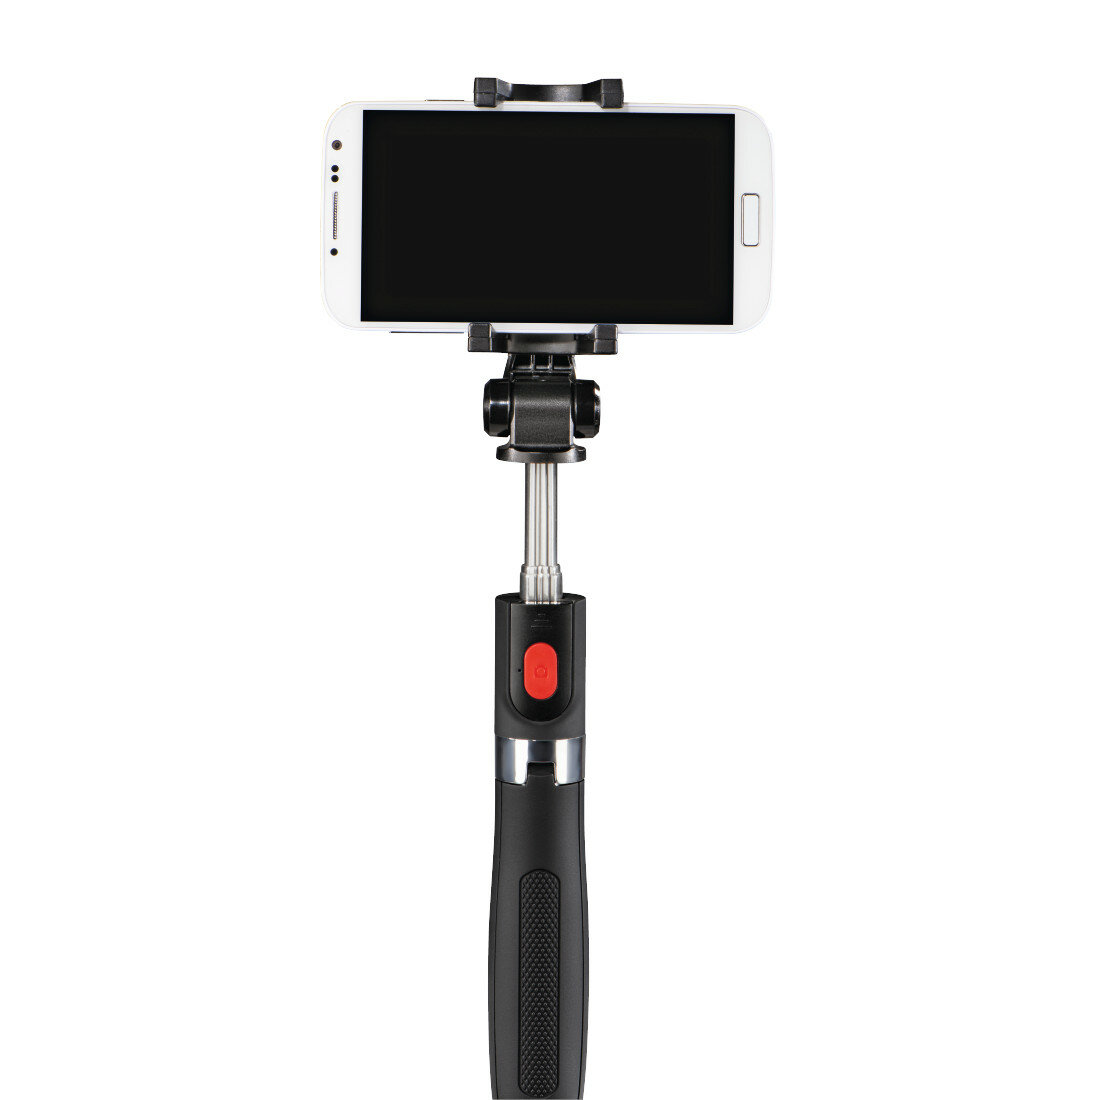 Kijek do selfie Hama Selfie Fun 70 ze smartfonem